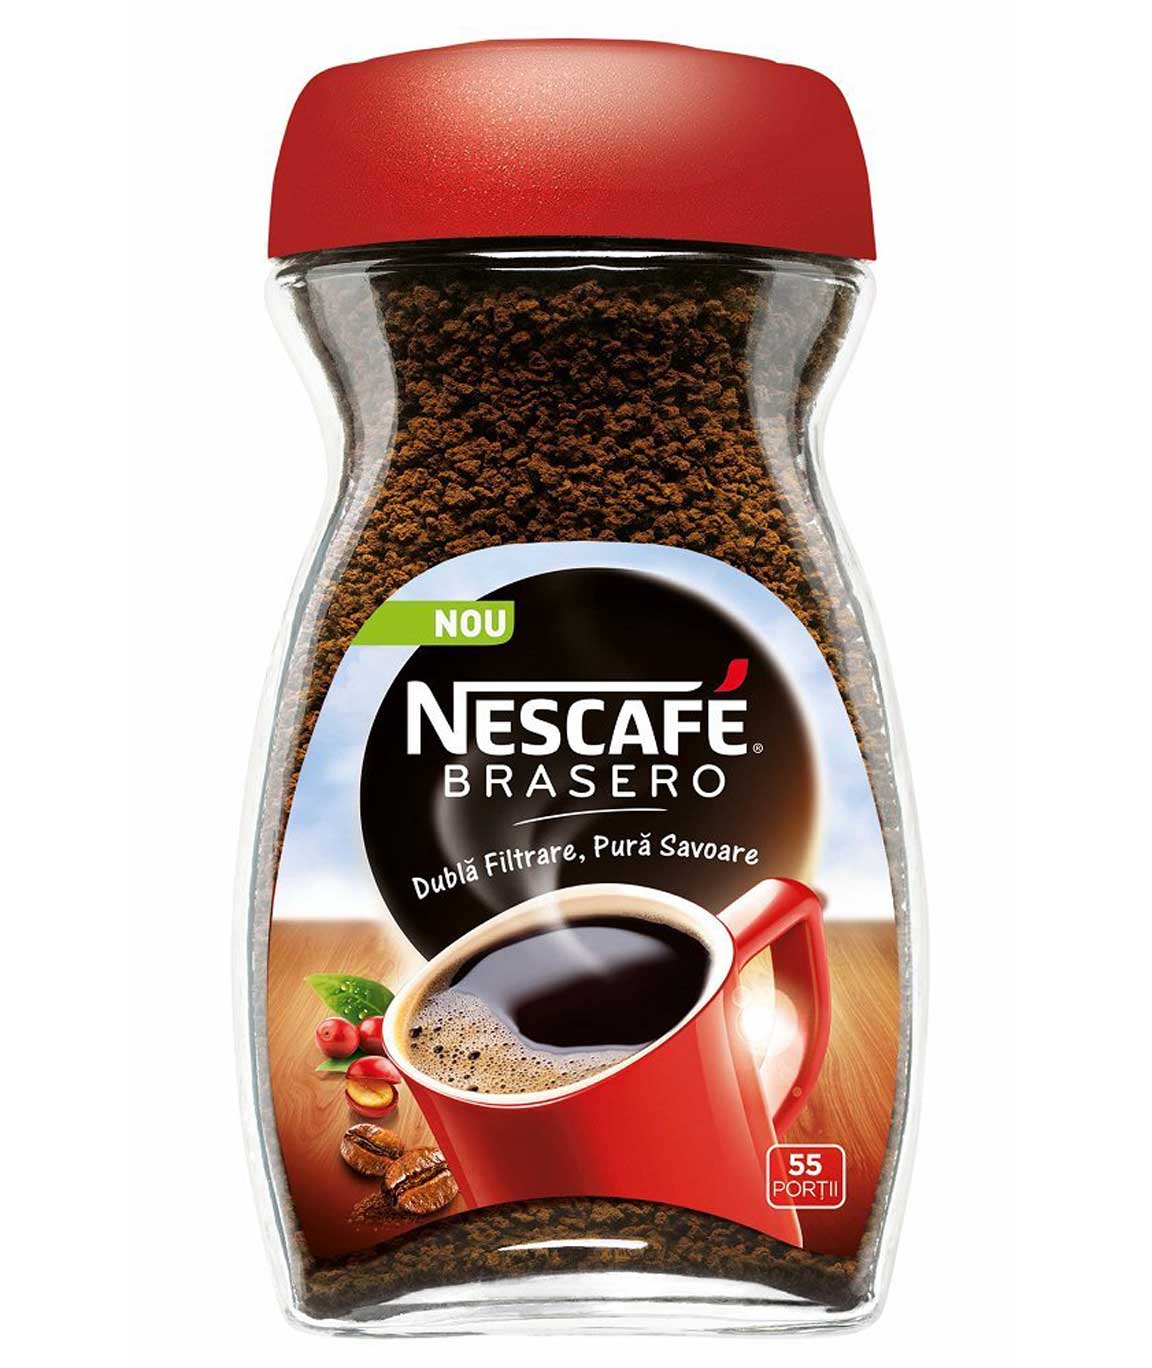 Nestle Nescafe Brasero Double Filter Coffee (100 g)